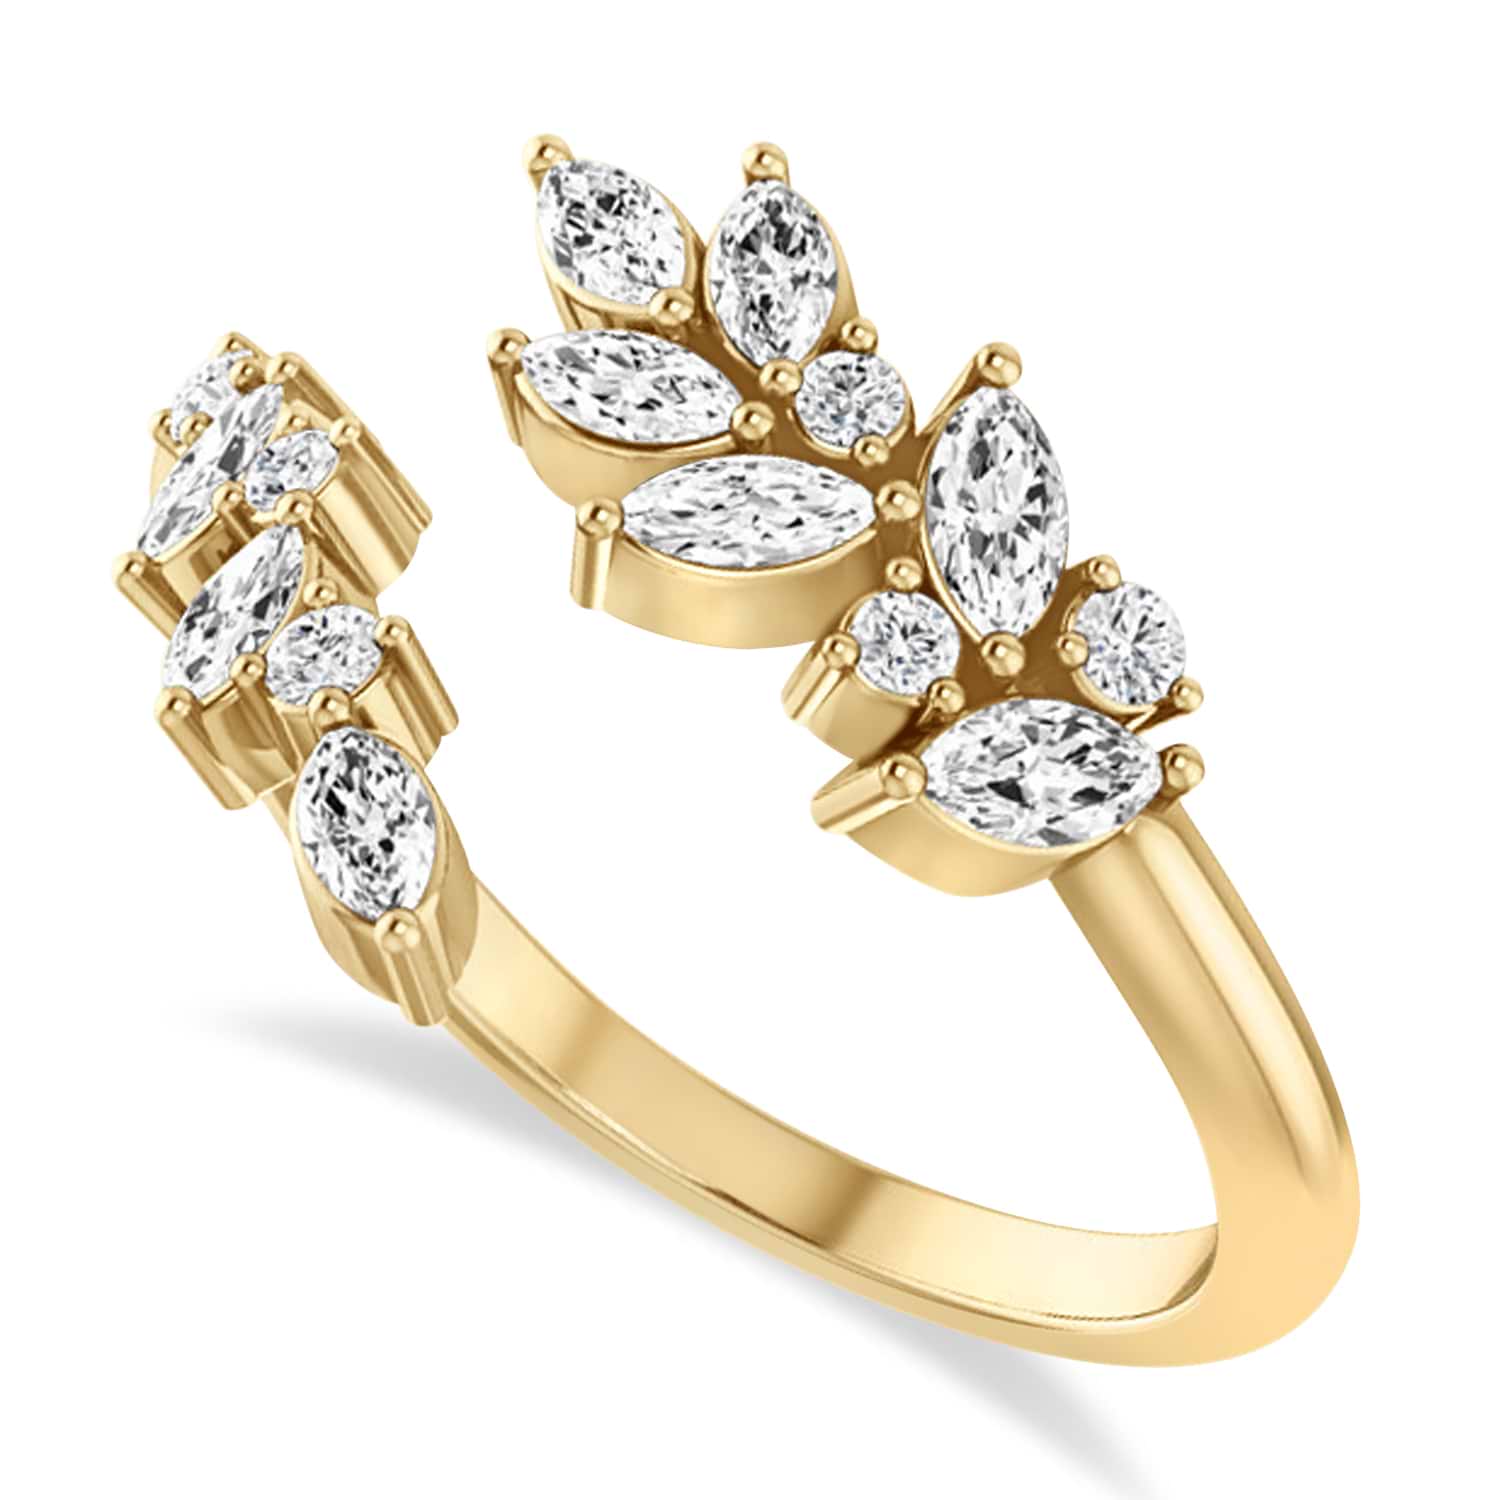 Diamond Bypass Ring/Wedding Band 14k Yellow Gold (0.85ct)